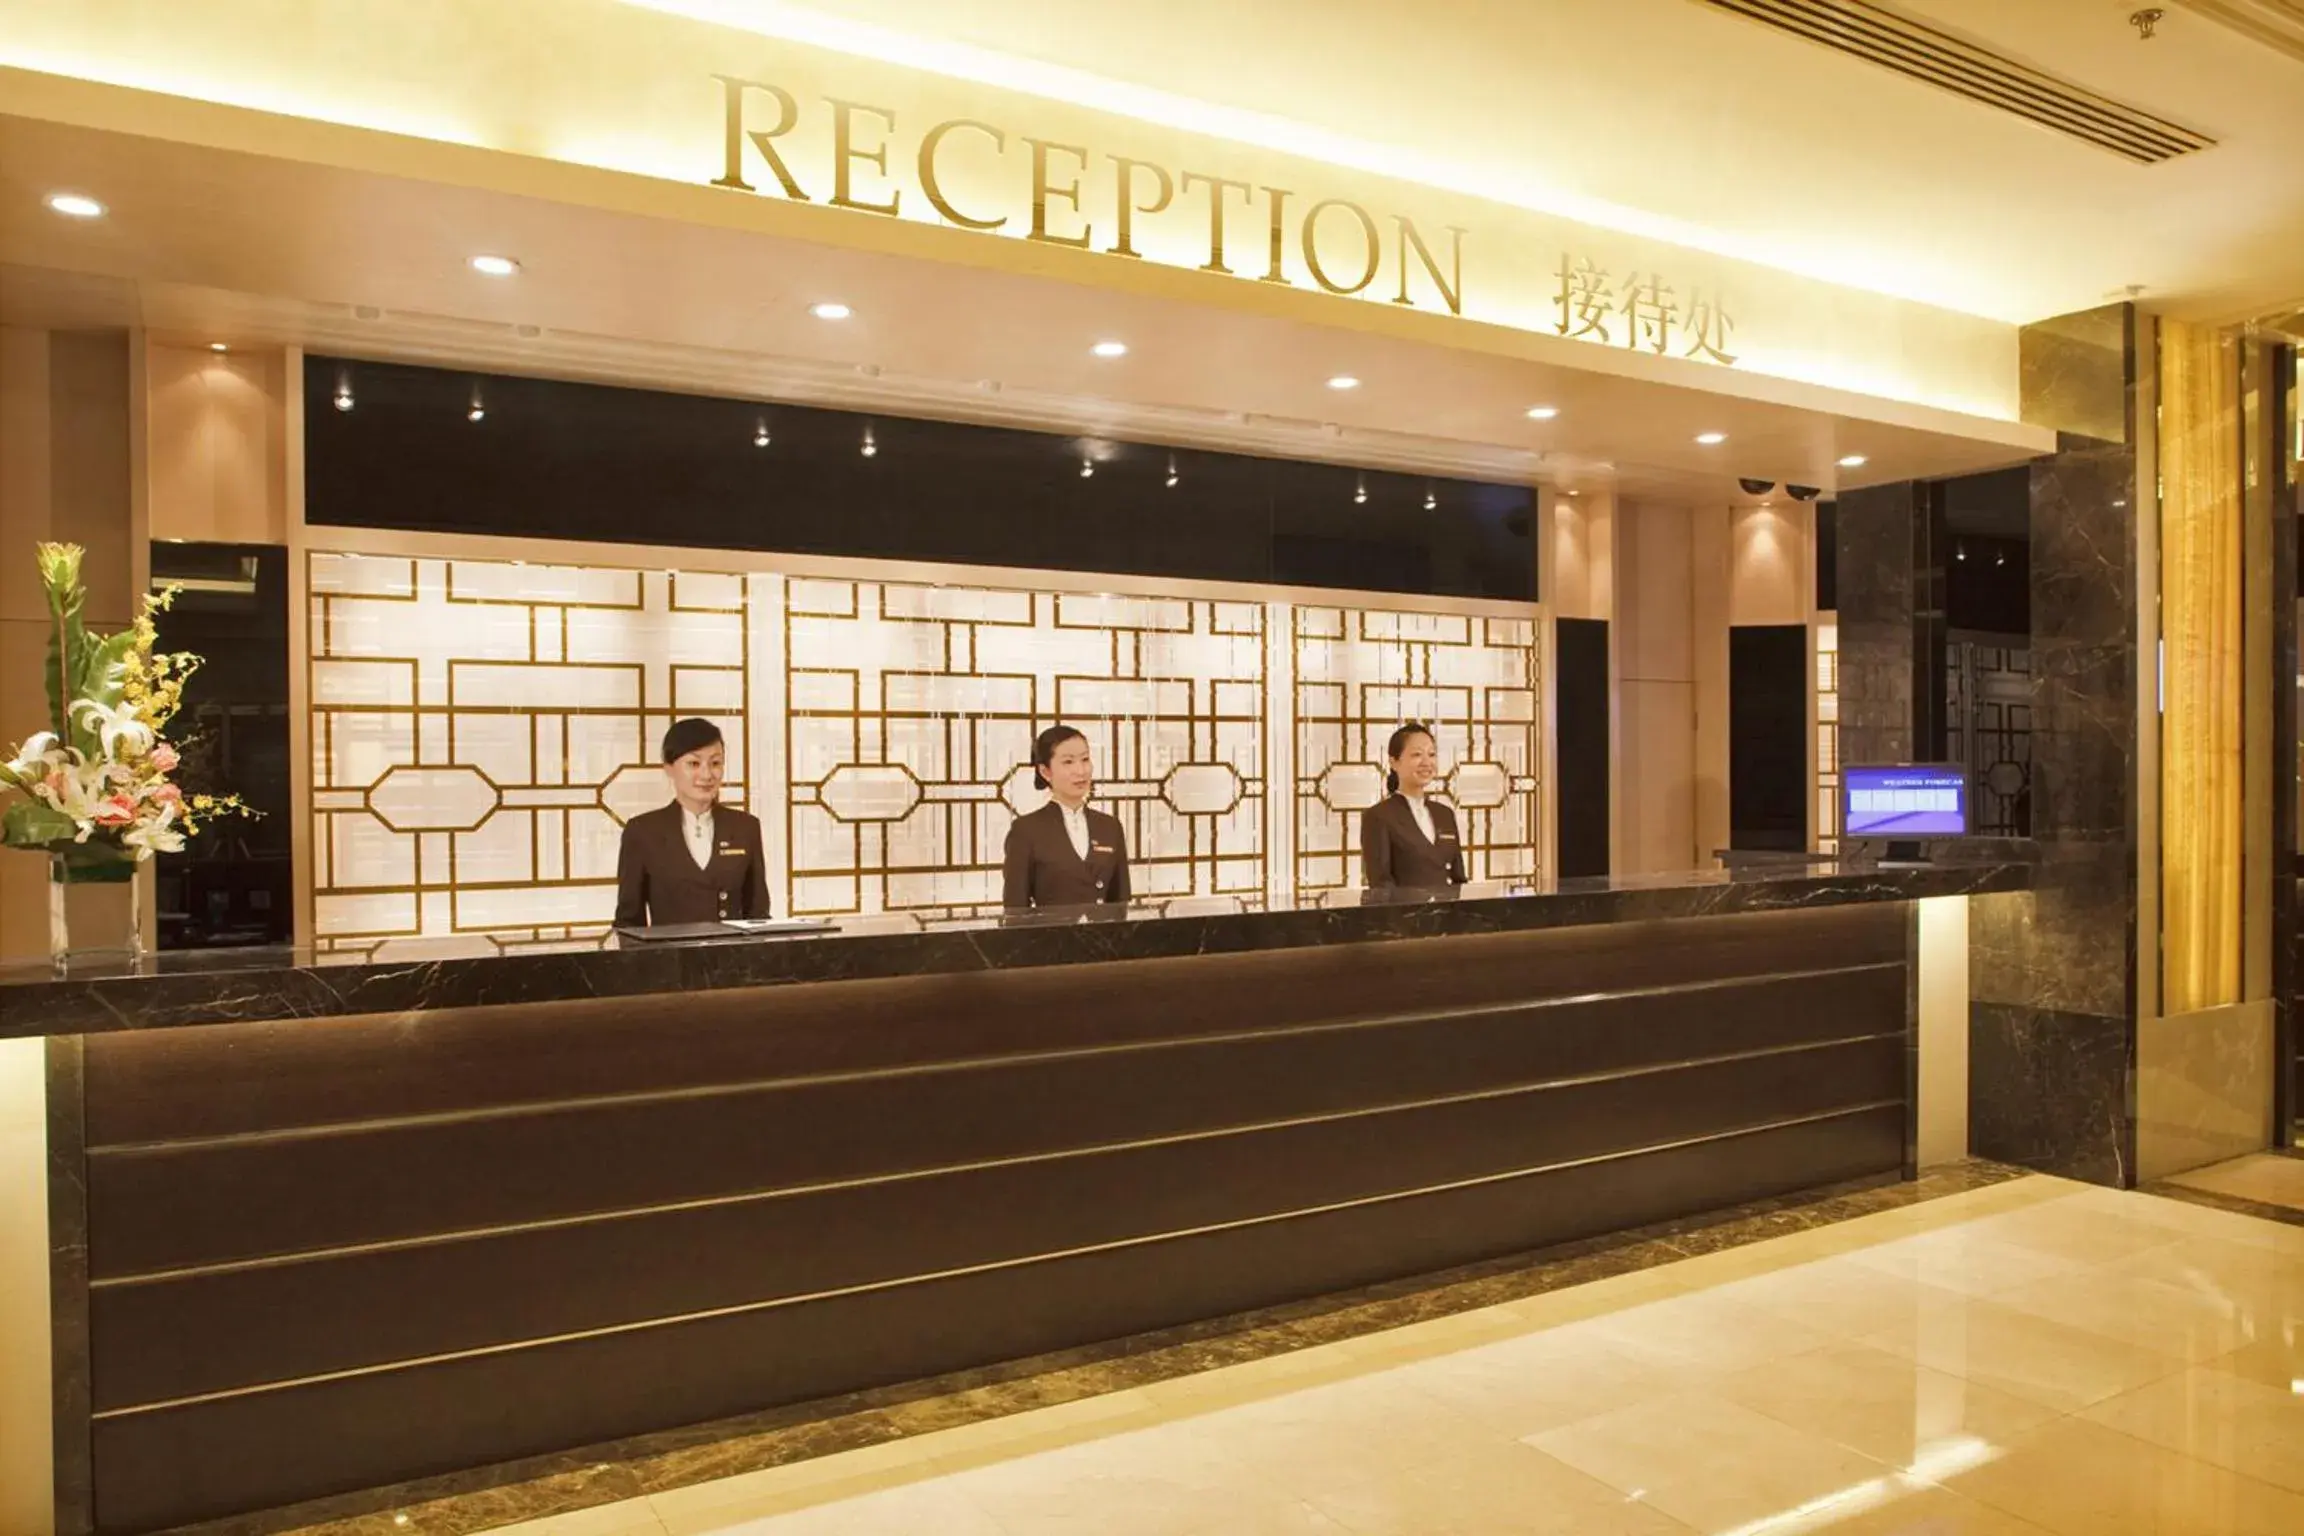 Lobby or reception in Juss Hengshan HotelFormer Regal International East Asia Hotel